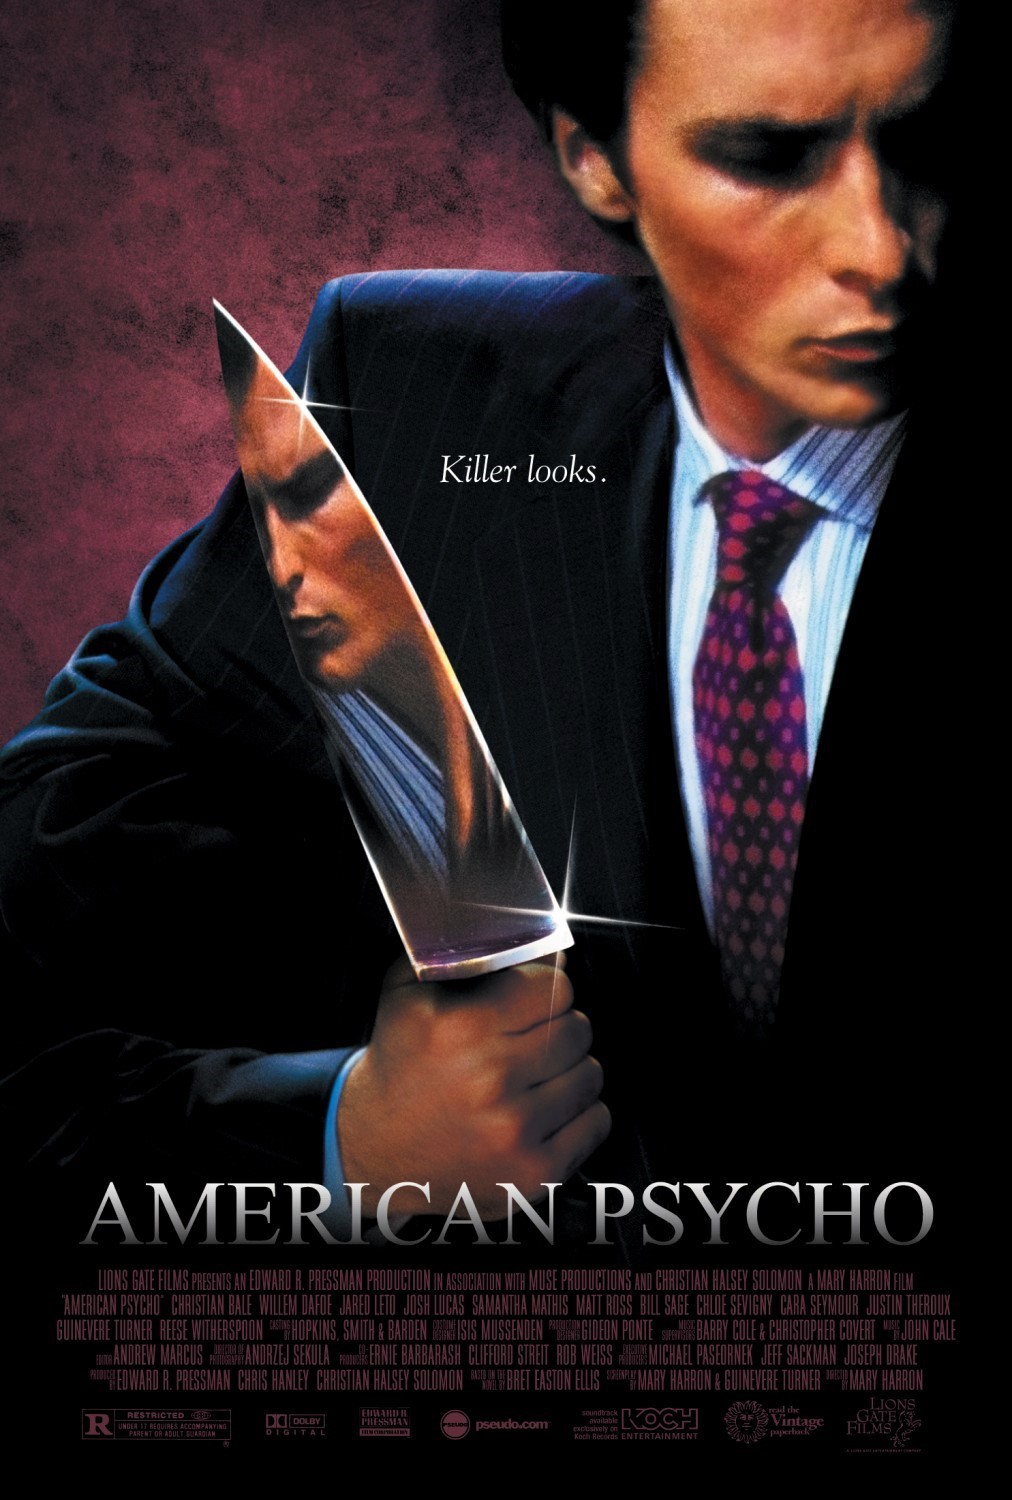 Jeff the Killer - IMDb